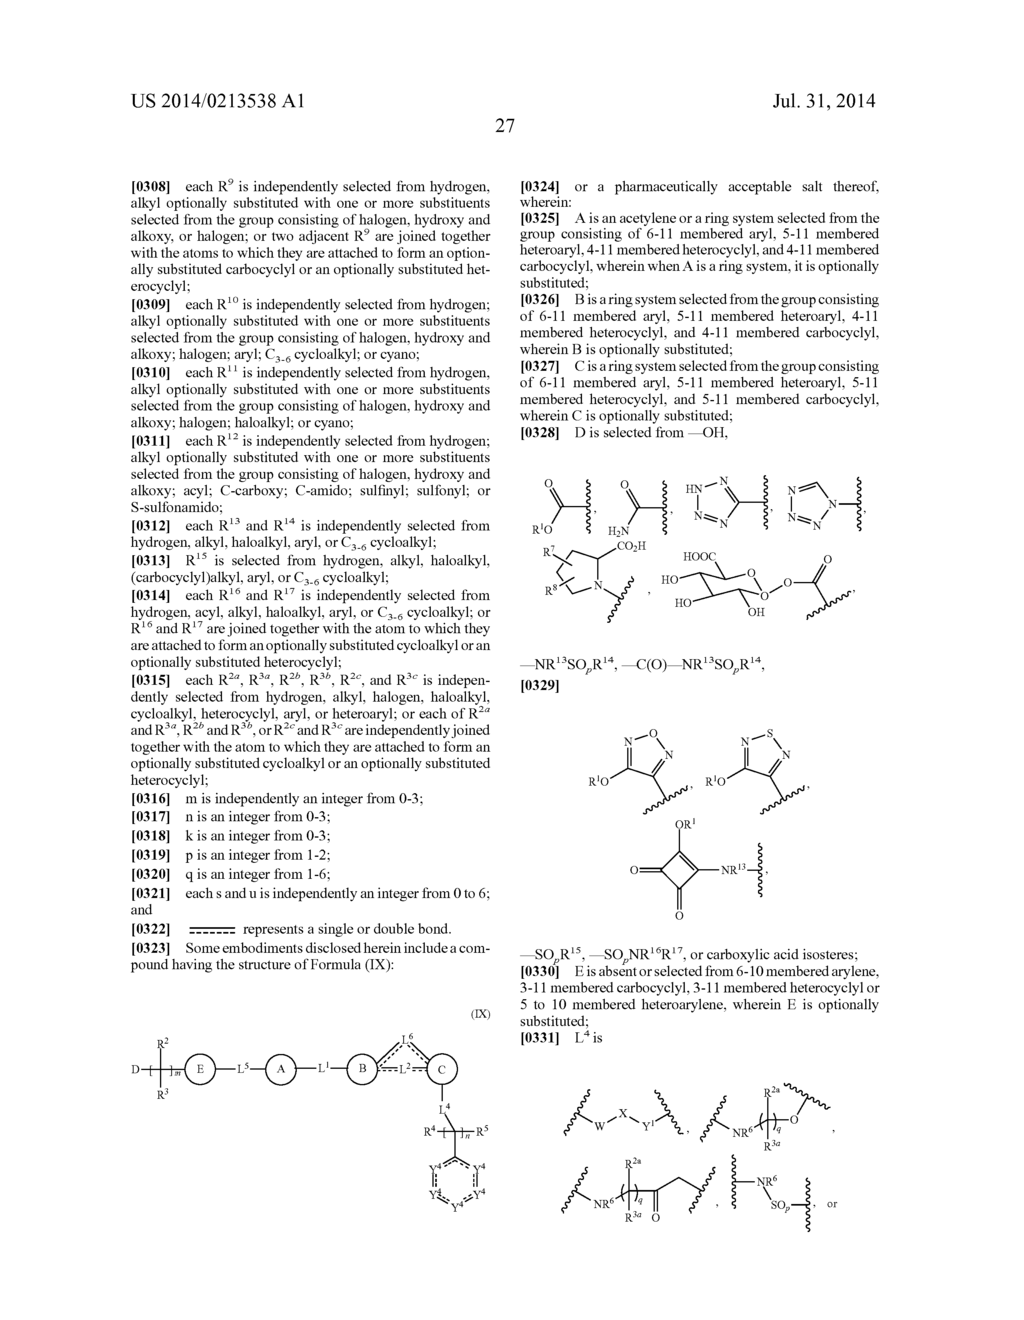 LYSOPHOSPHATIDIC ACID RECEPTOR ANTAGONISTS - diagram, schematic, and image 28